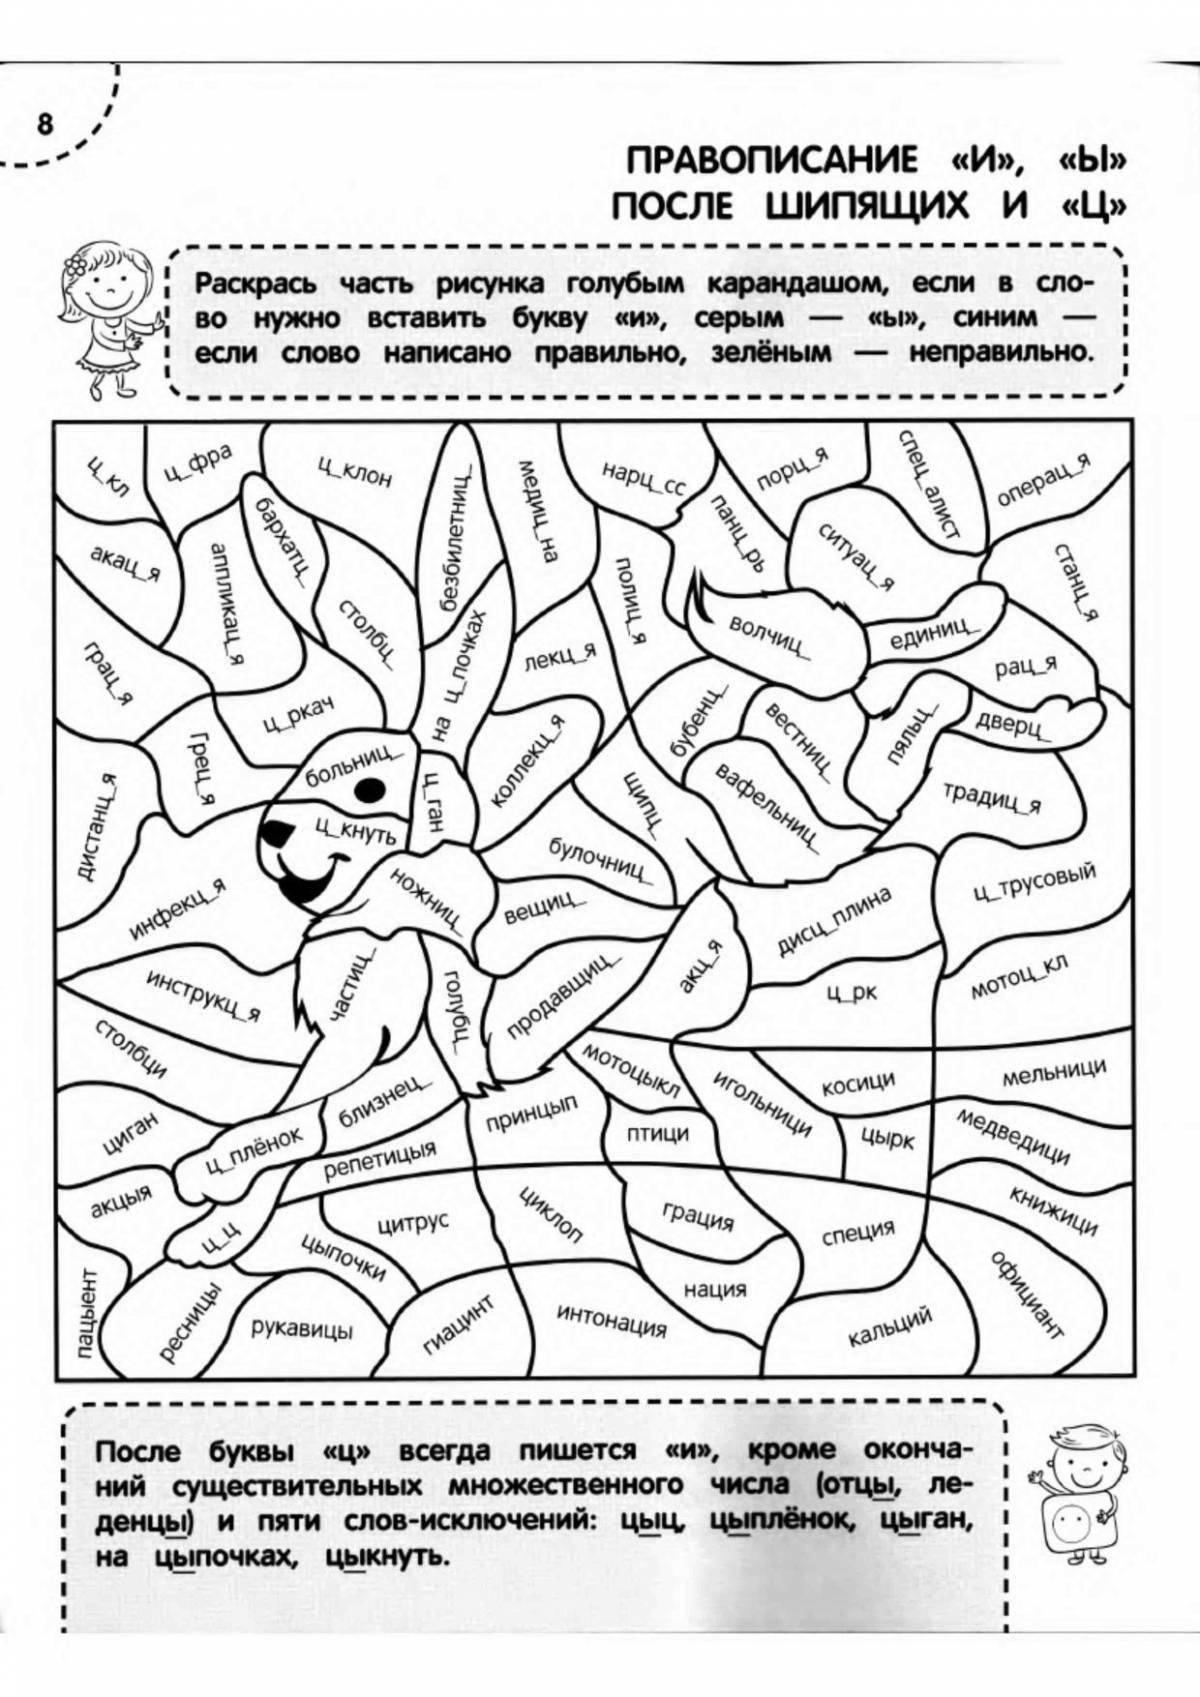 Colorful coloring in Russian, Grade 5